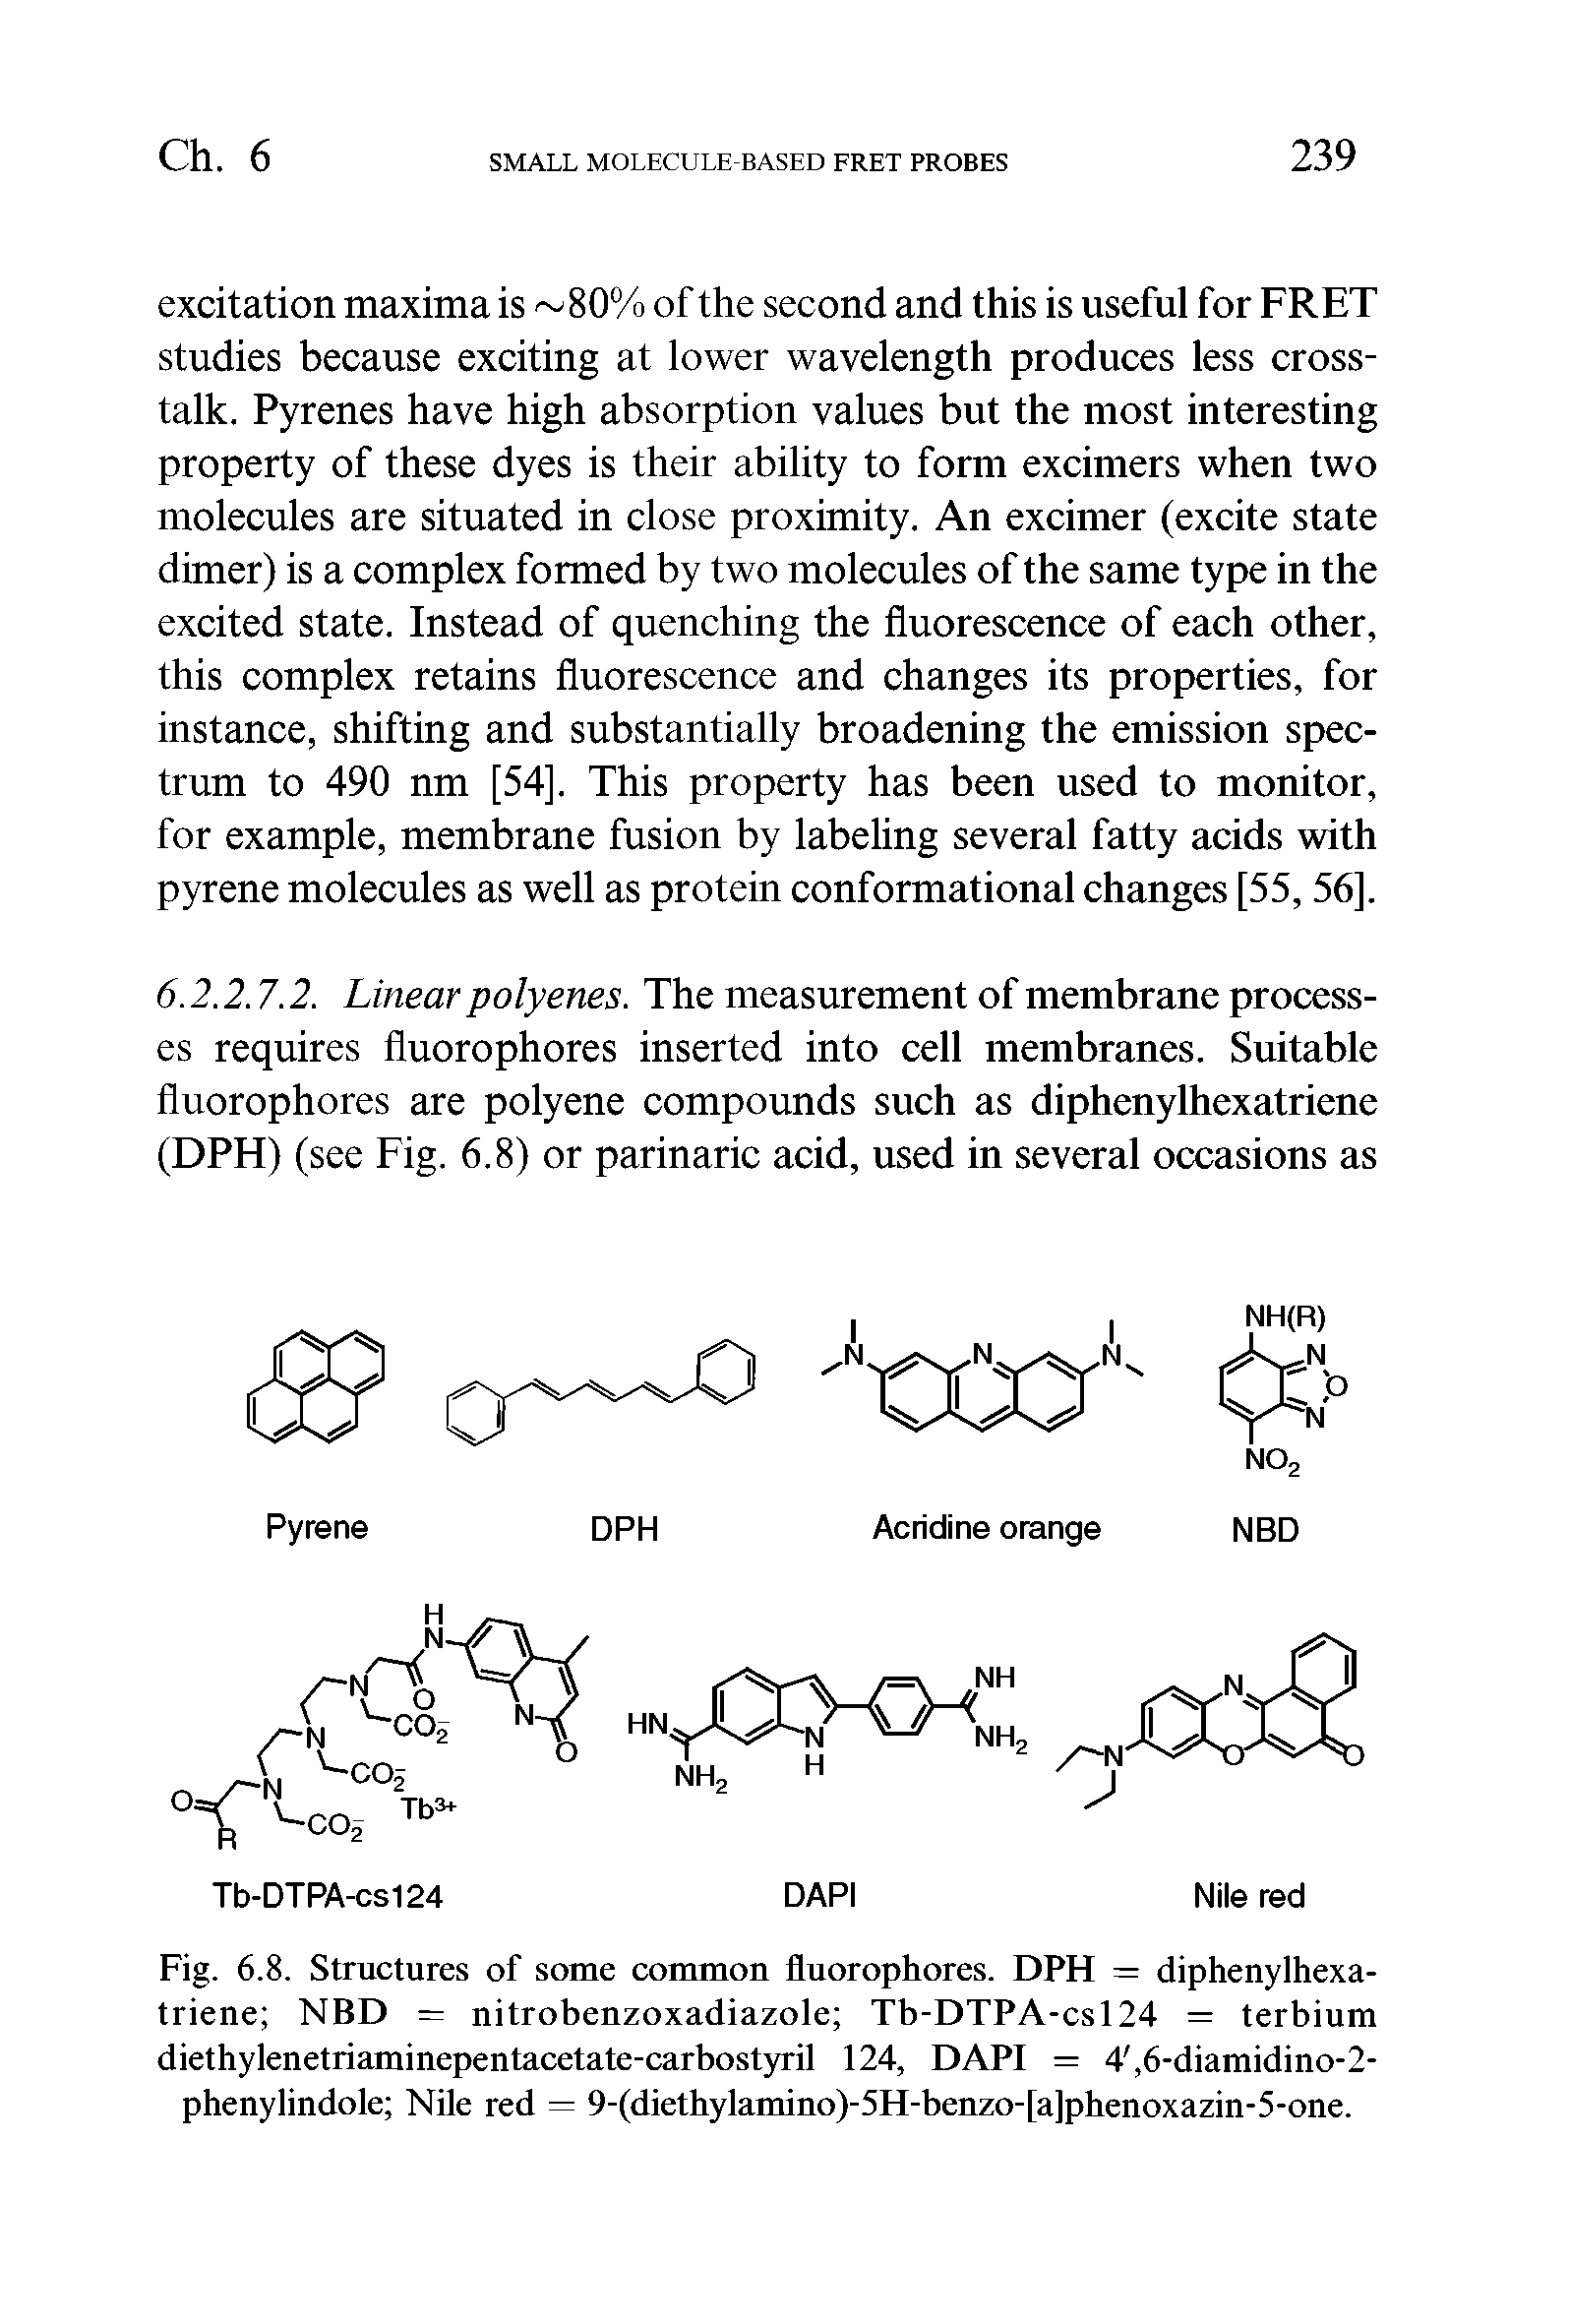 Fig. 6.8. Structures of some common fluorophores. DPH = diphenylhexatriene NBD = nitrobenzoxadiazole Tb-DTPA-csl24 = terbium diethylenetriaminepentacetate-carbostyril 124, DAPI = 4, 6-diamidino-2-phenylindole Nile red = 9-(diethylamino)-5H-benzo-[a]phenoxazin-5-one.